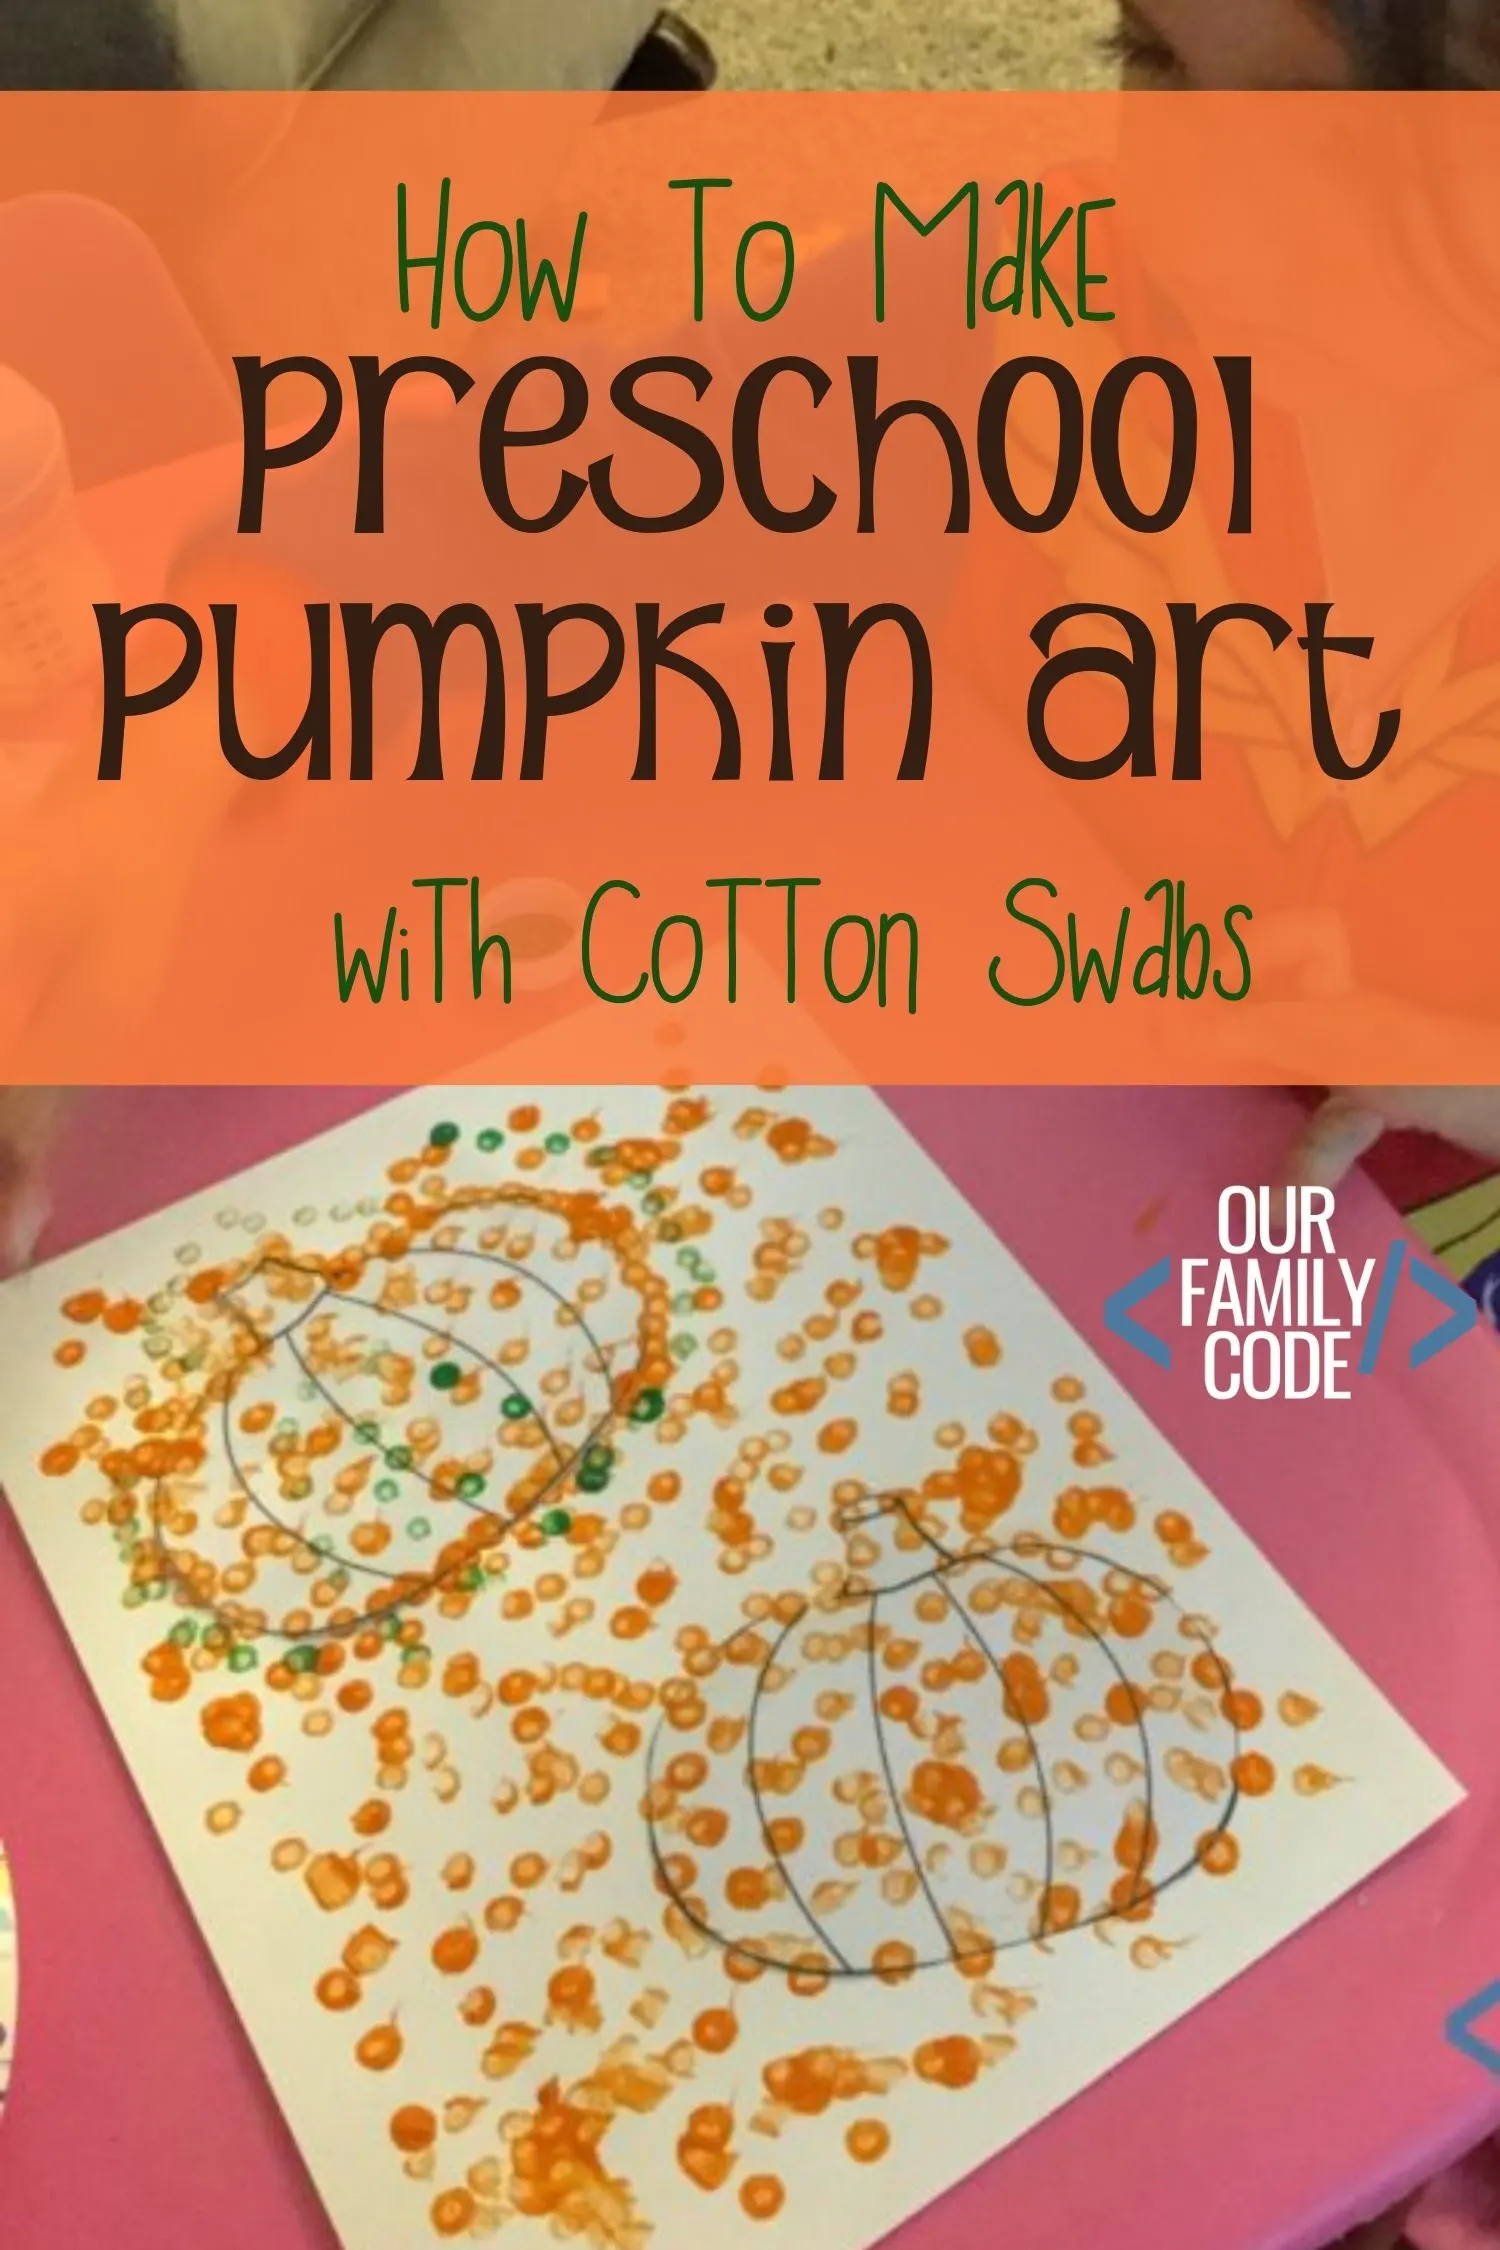 How to Make Preschool Pumpkin Art with Cotton Swabs #easykidprojects #easytoddlerprojects #easypumpkinprojects #preschoolprojectsforfall #qtippainting #preschoolpaintingprojects #howtopaintpumpkinswithqtips